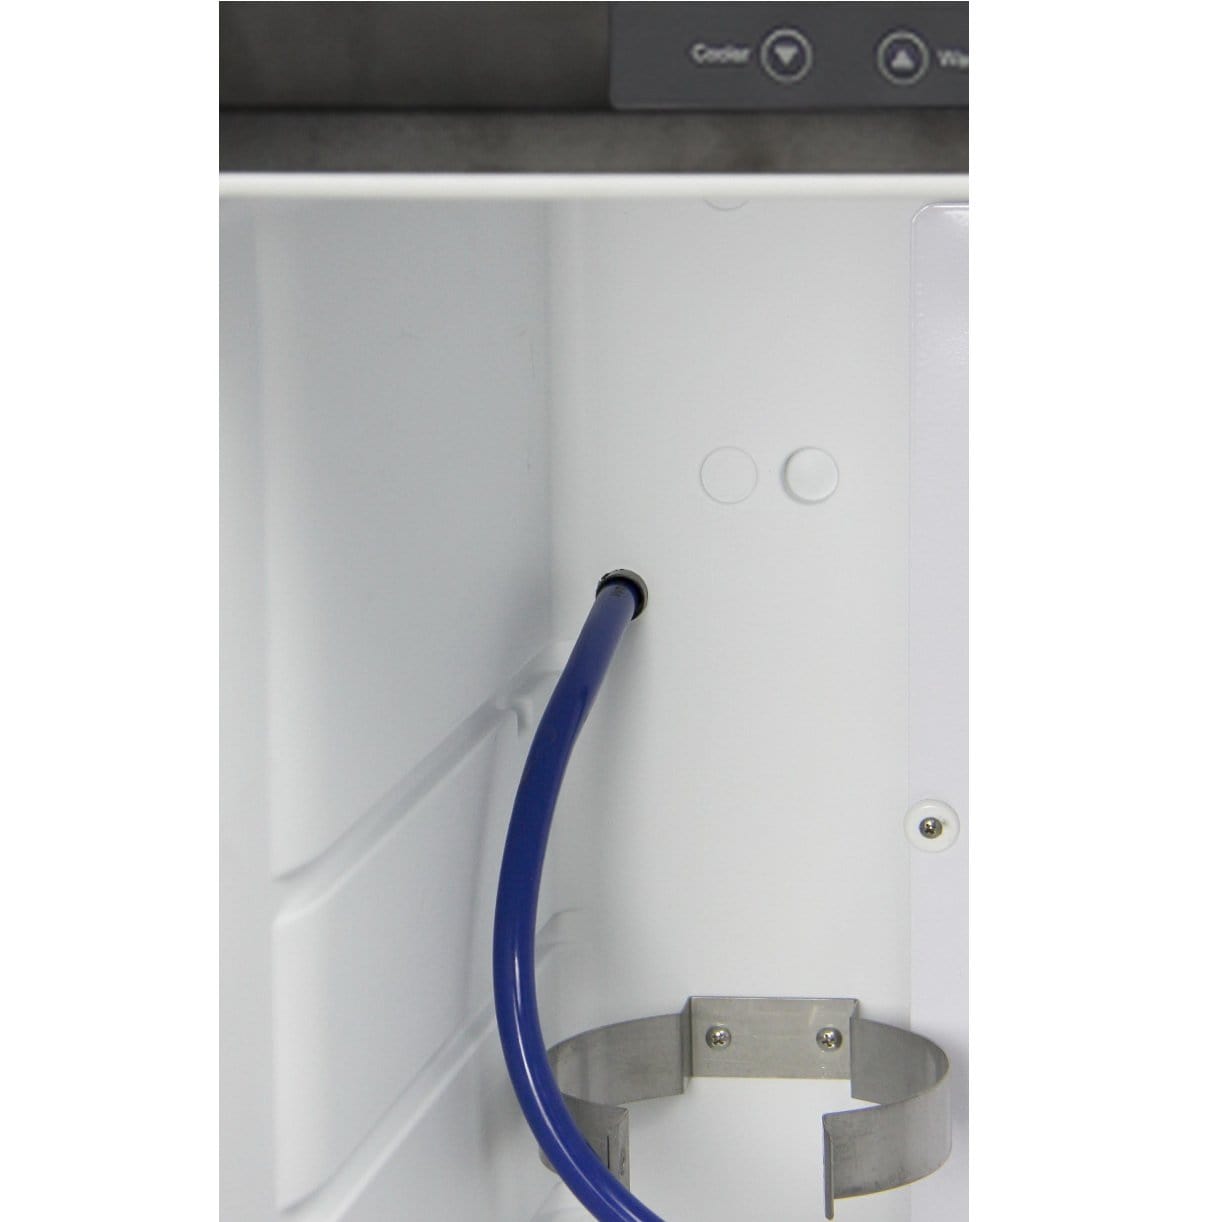 Kegco Three Keg Tap Faucet Digital Kegerator - Black Matte Cabinet and Stainless Steel Door